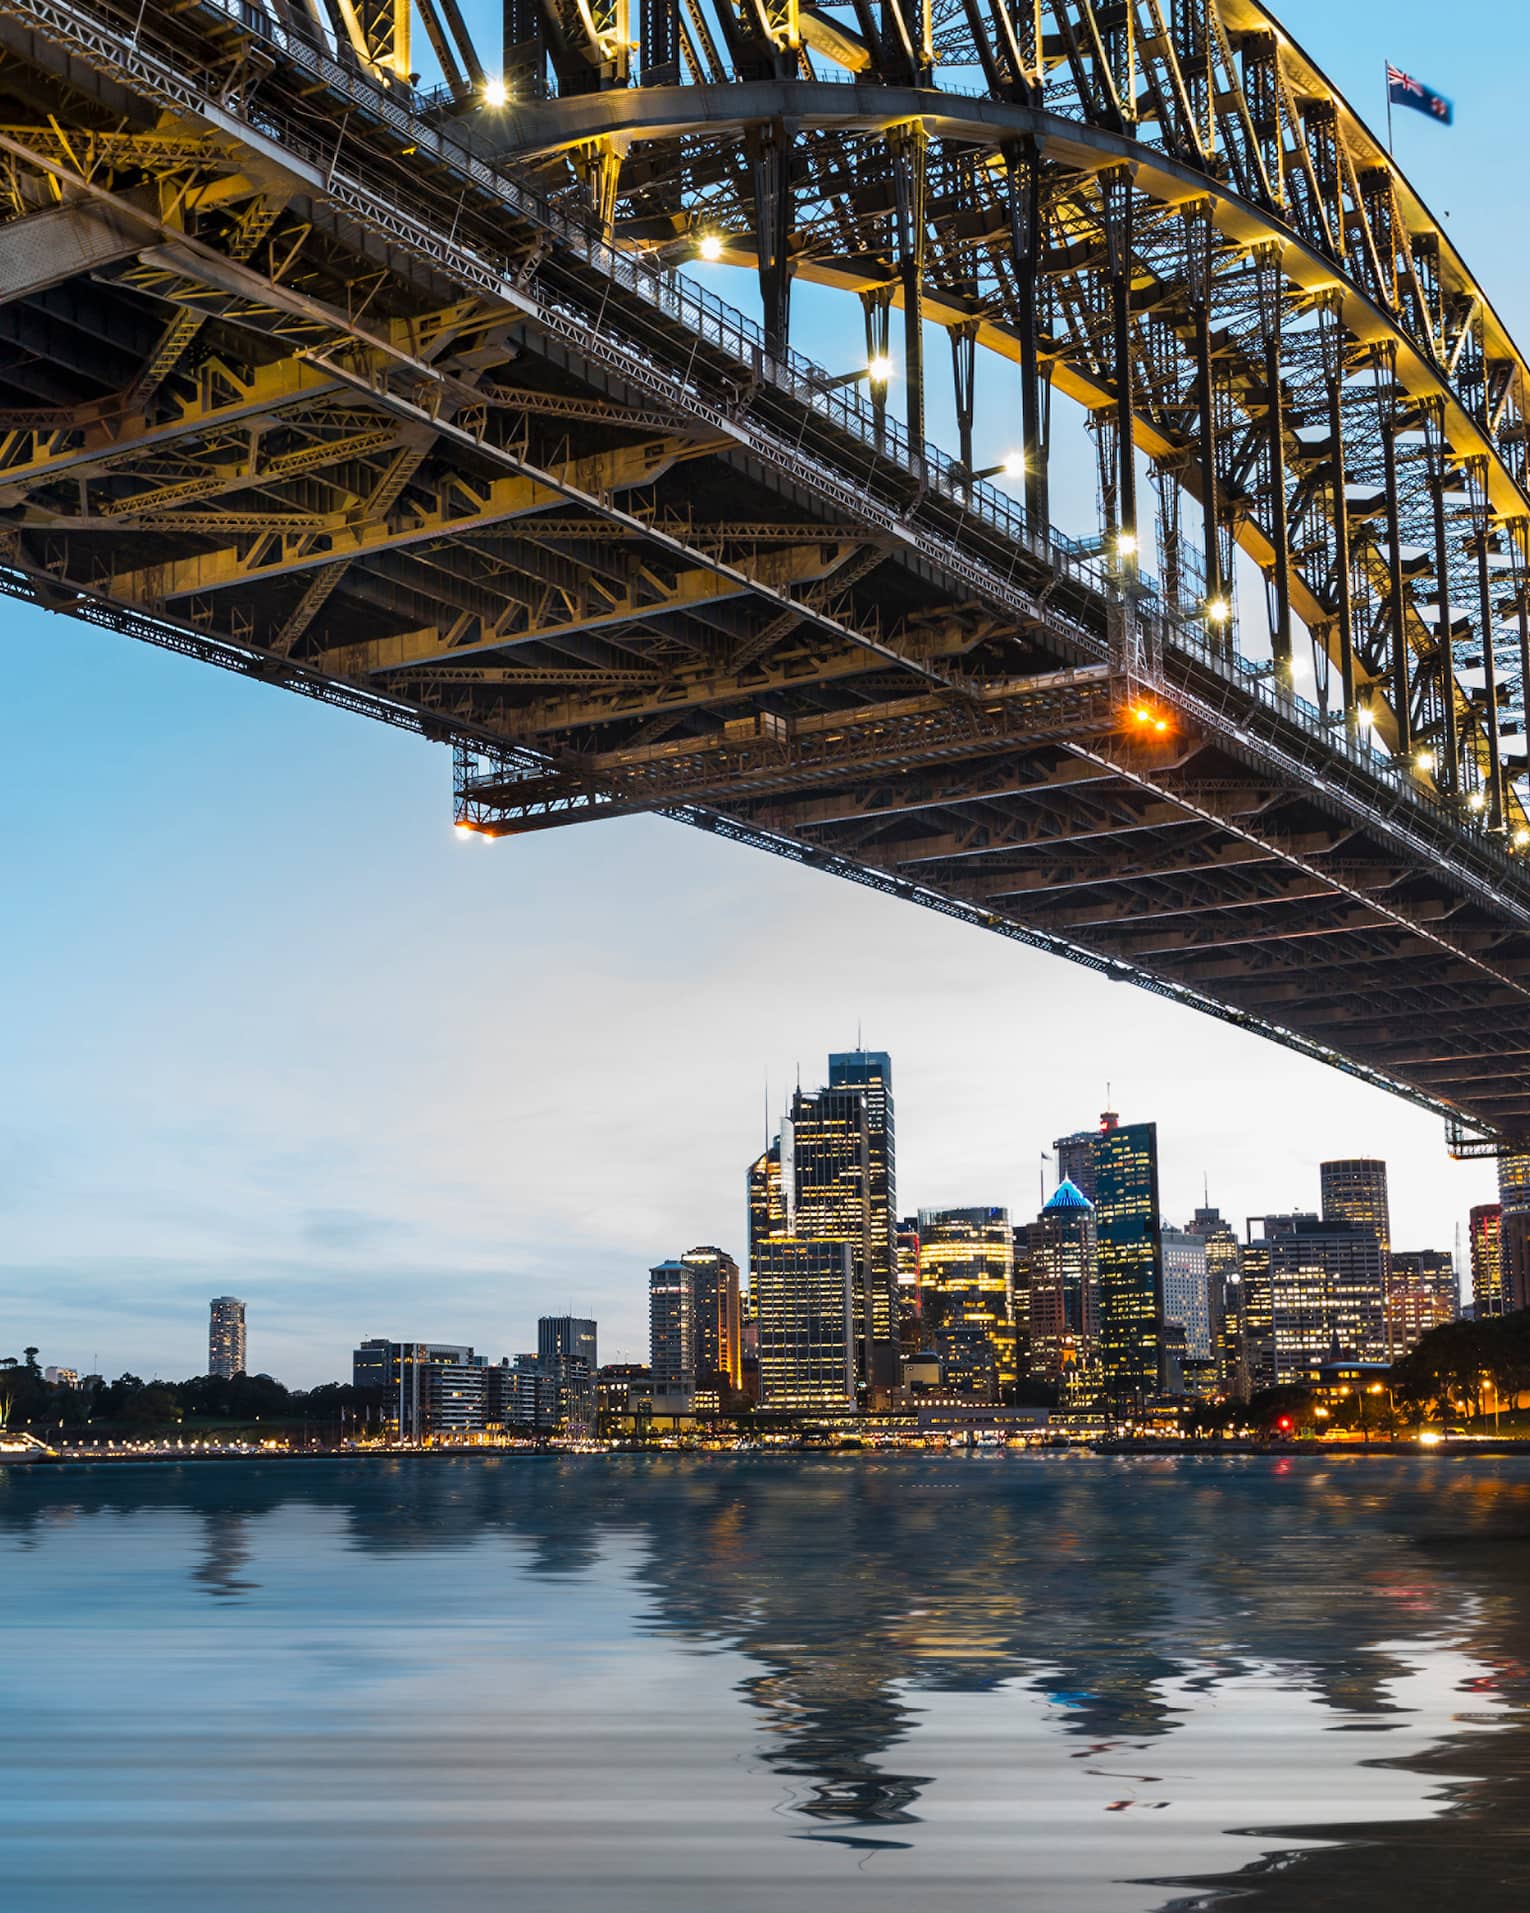 View from under bridge to Sydney waterfront skyline, lights at dusk